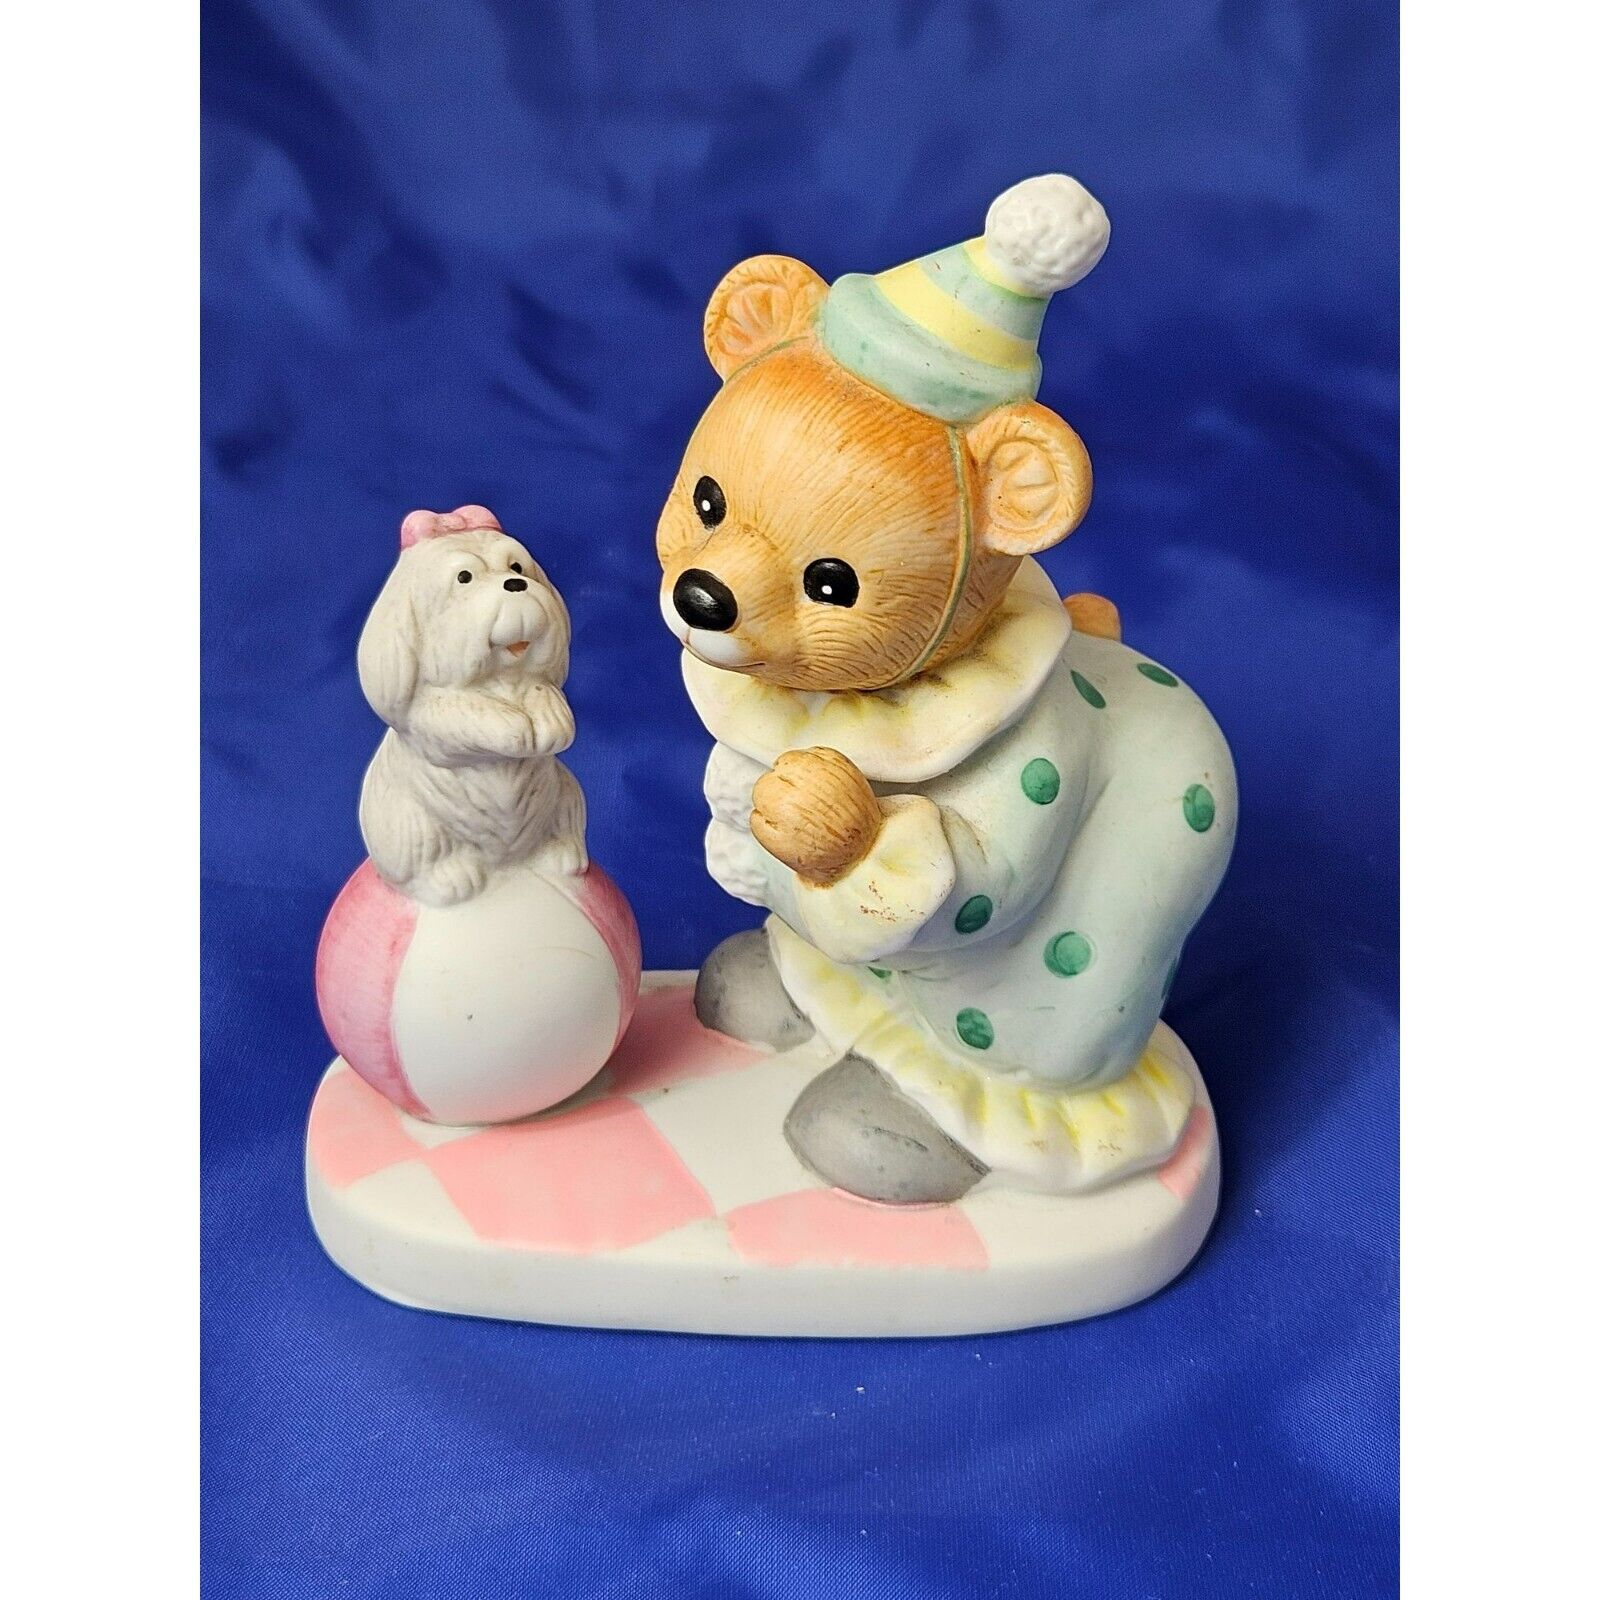 Vintage Homco Bisque Ceramic Figurine 8881 Circus Teddy Bear Clown Dog Puppy